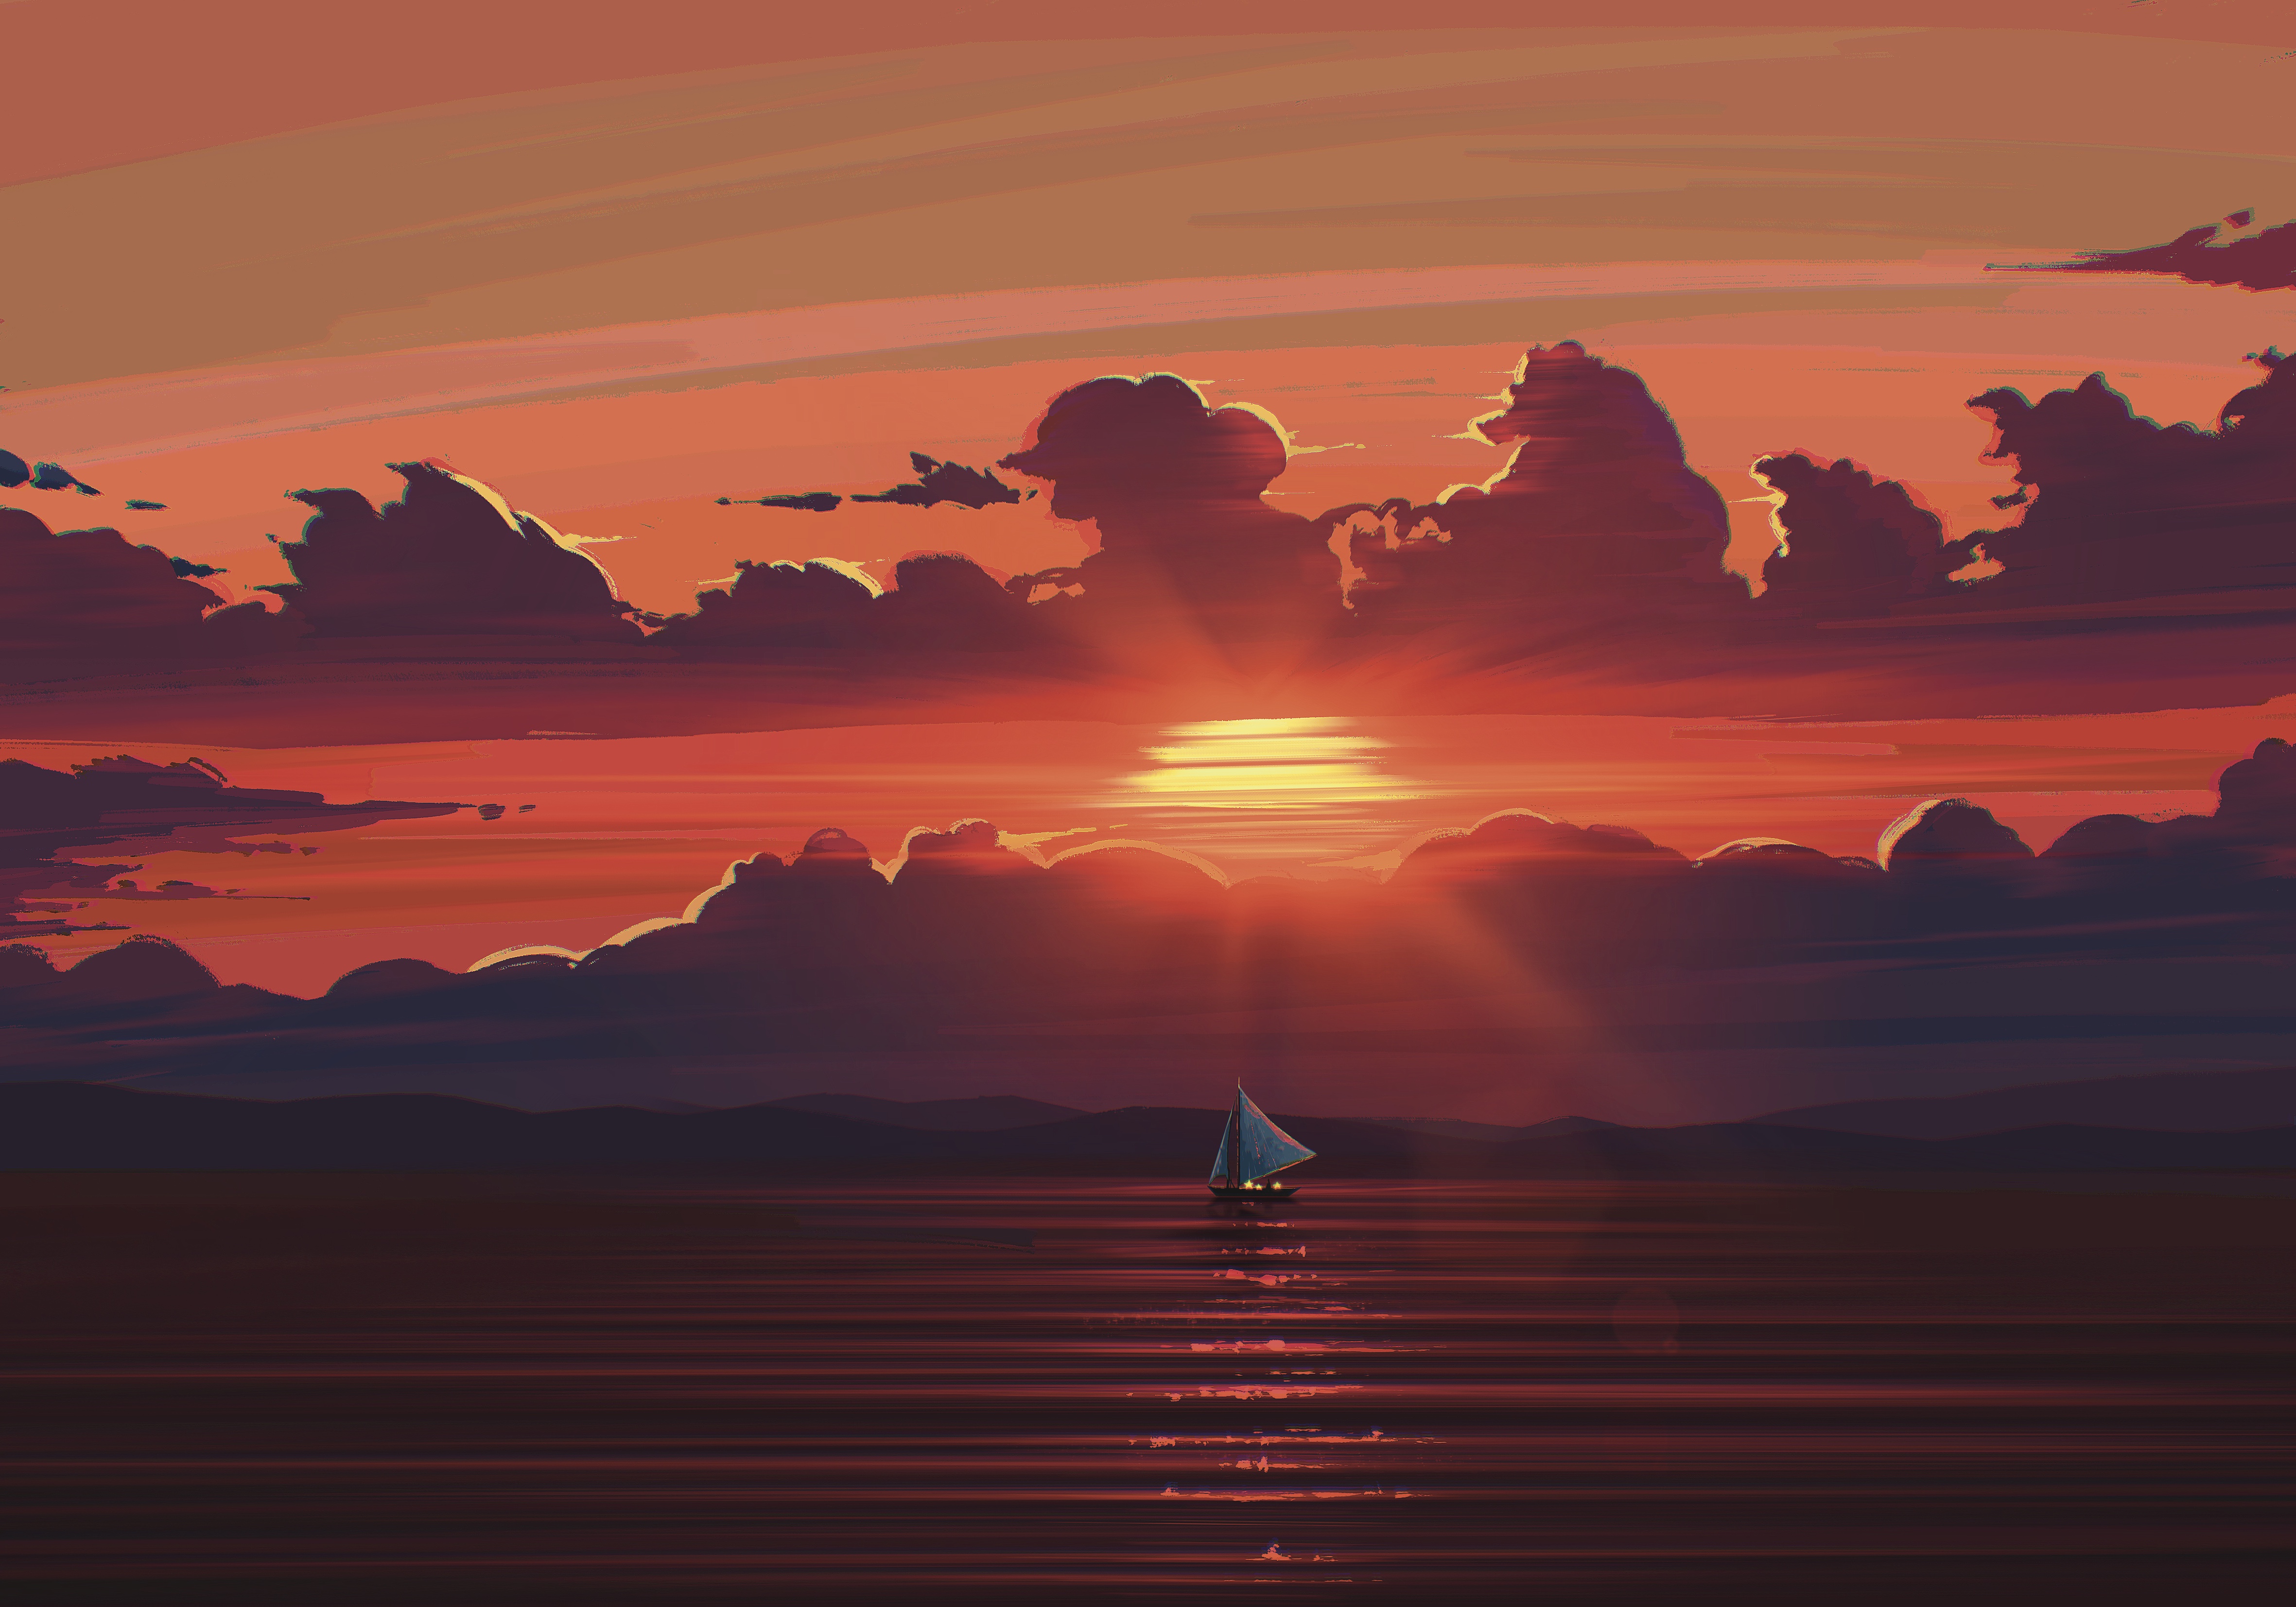 General 4724x3307 digital art artwork illustration painting landscape sunset sea water clouds boat sailing ship mountains sky sunlight sailboats Sun